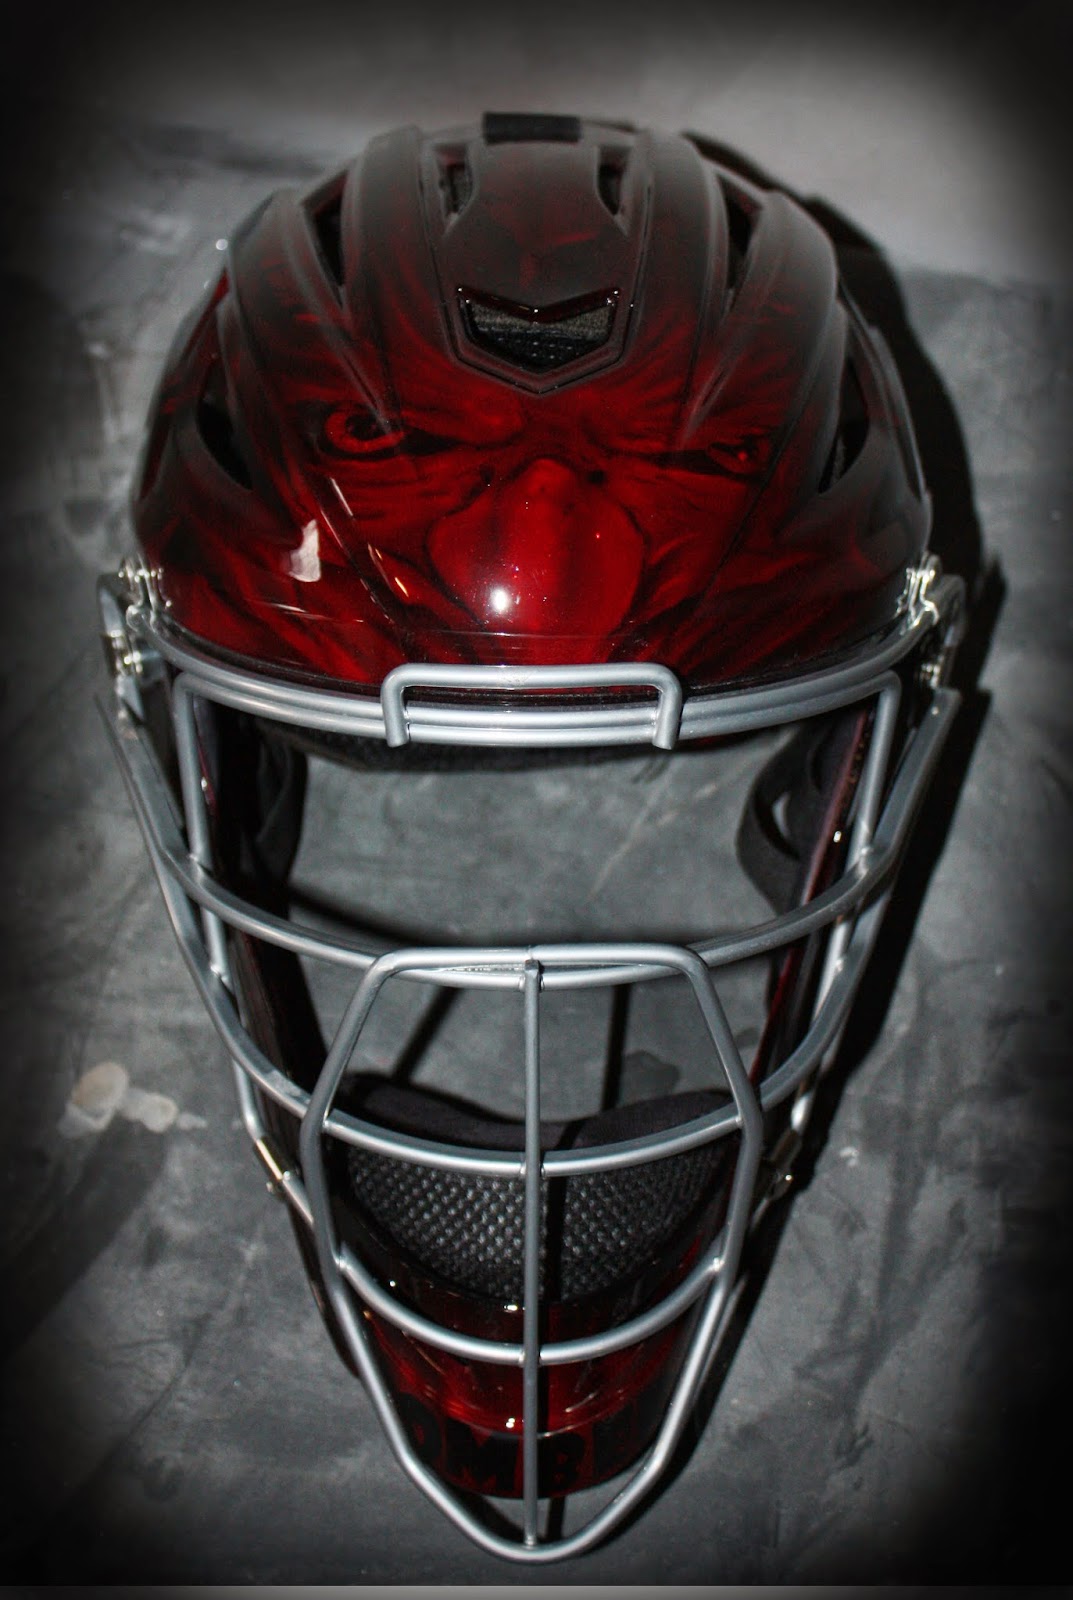 Online Motorcycle Paint Shop: Custom Painted Catcher Baseball Helmet. "Bomber"